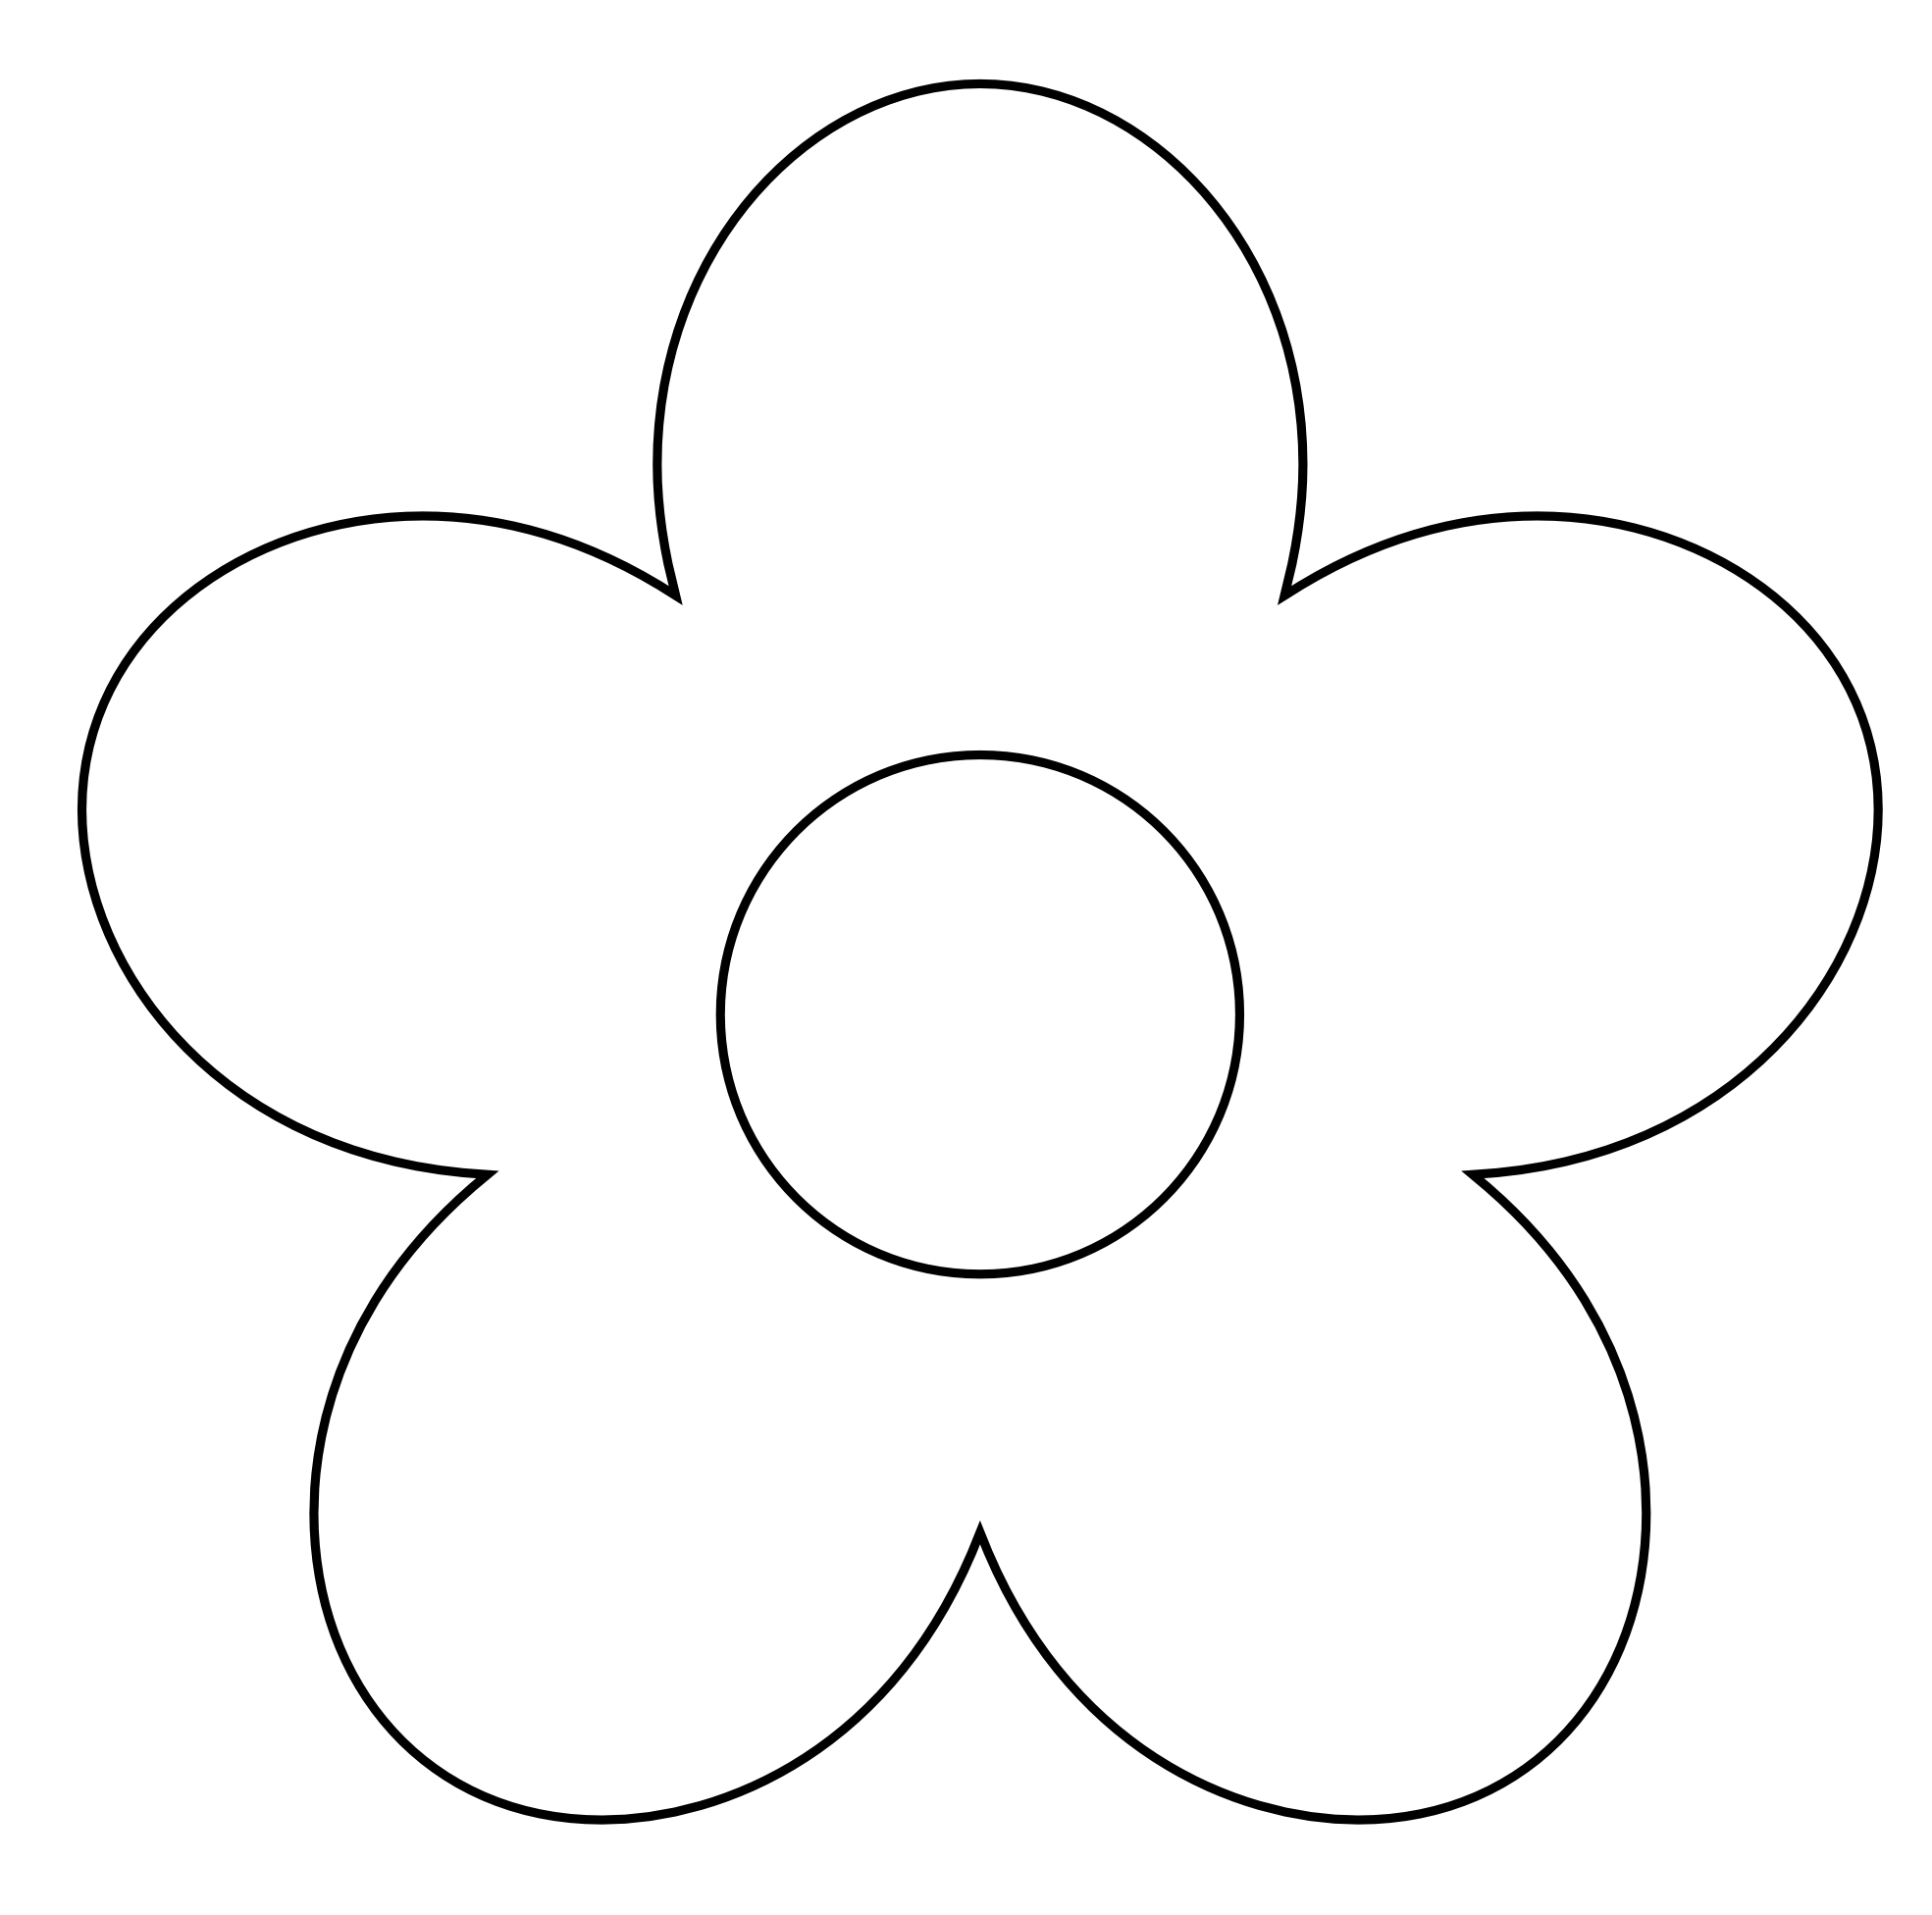 White Flower Clip Art - Cliparts.co